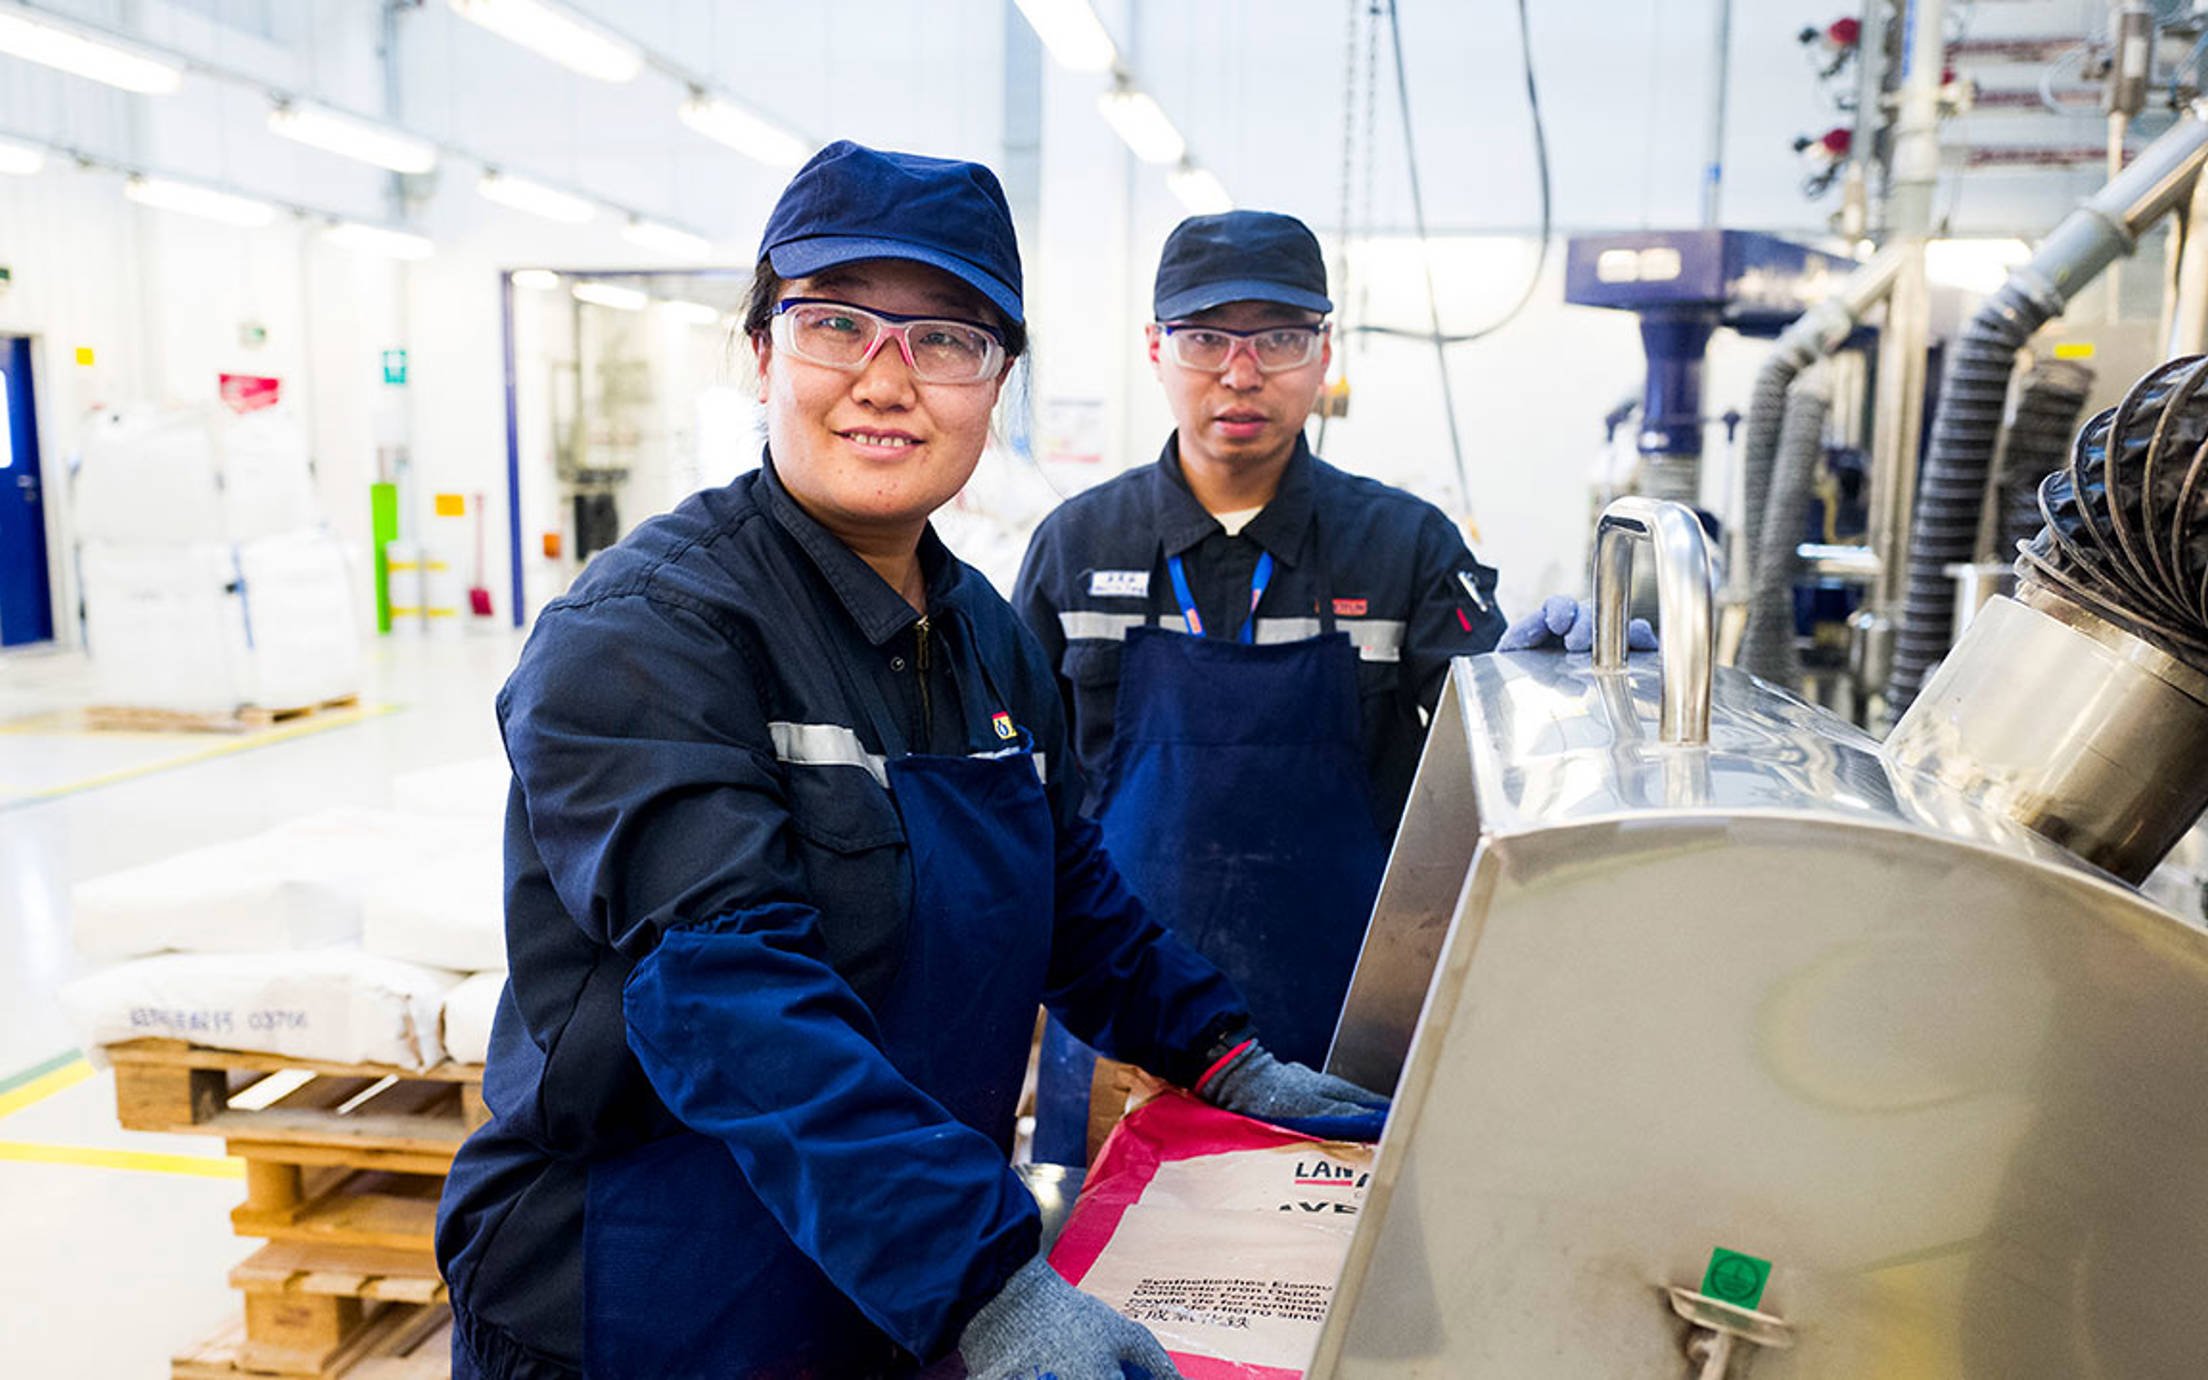 Jotun employees in China